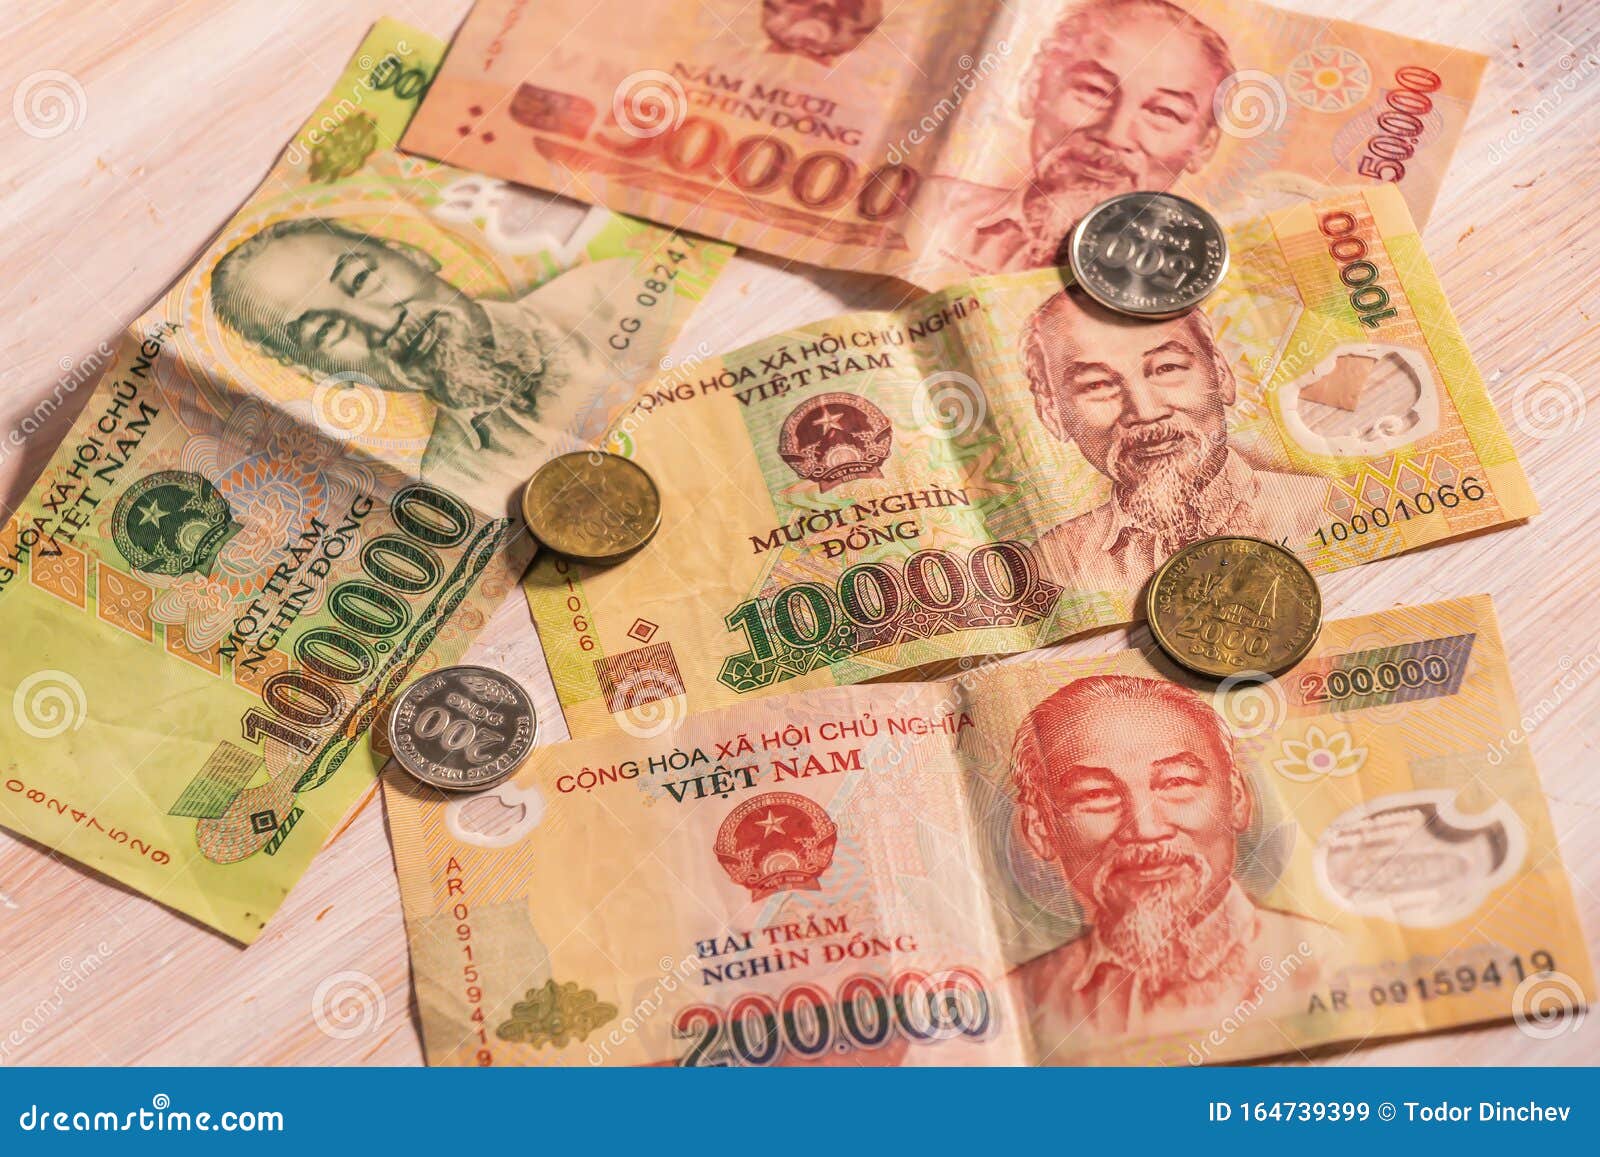 Cir. 100,000 X 3 Total Of 300,000 VND Vietnam 100000 Vietnamese Dong Banknote 